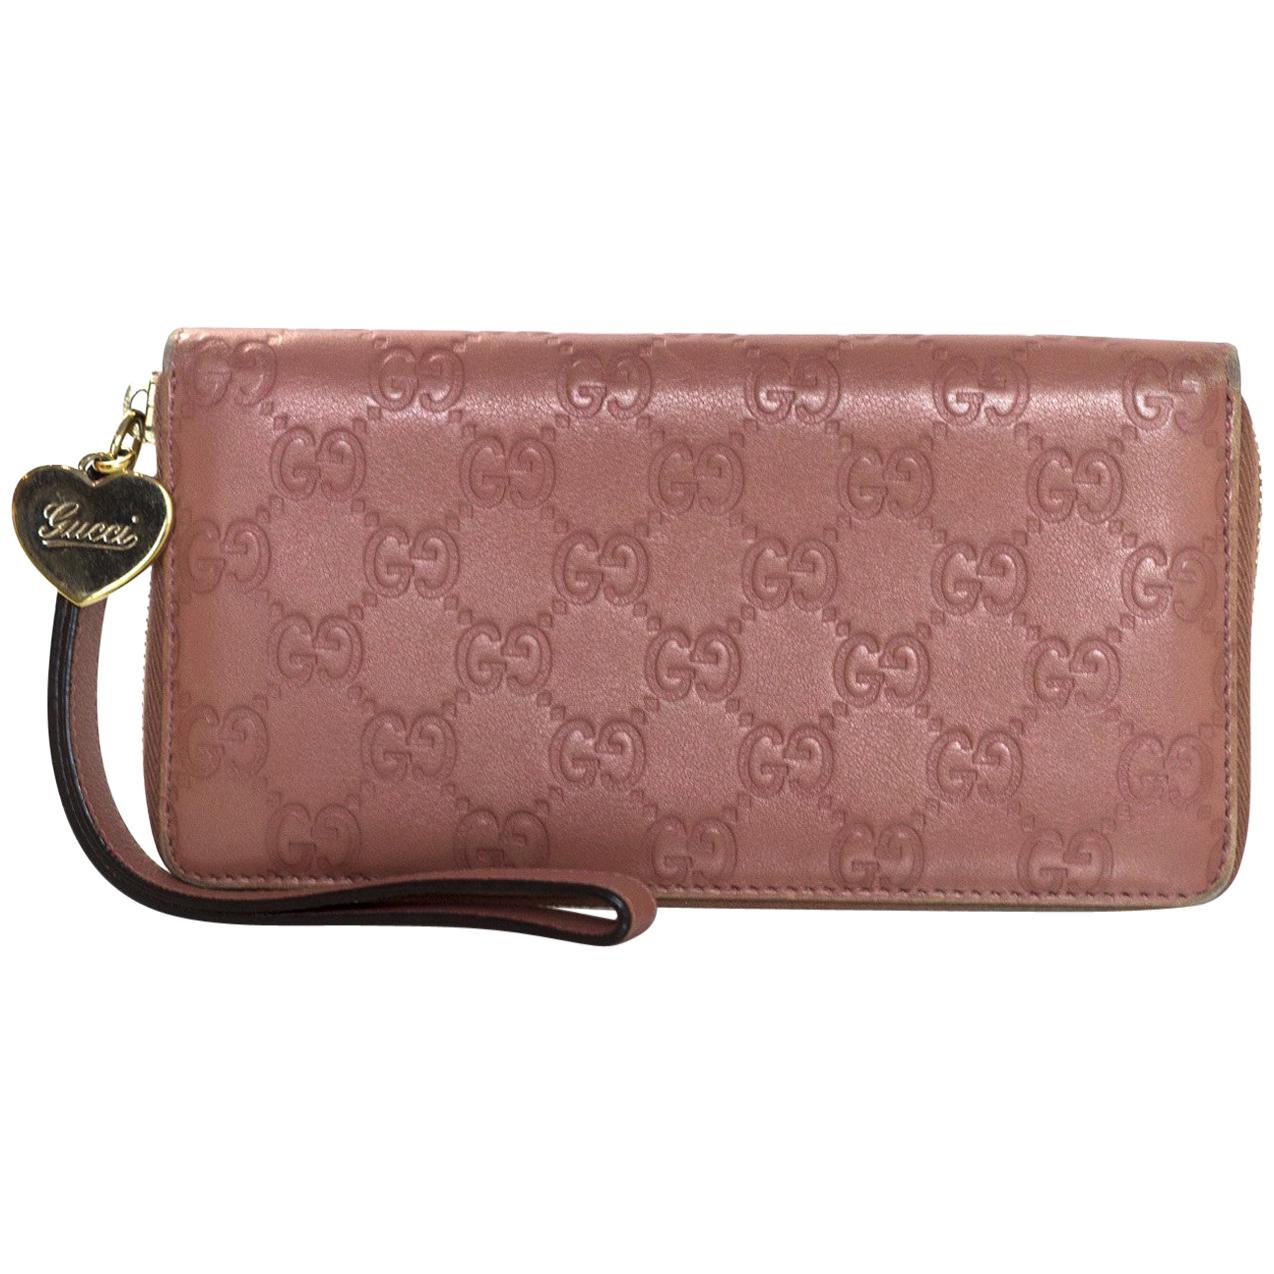 Gucci Pink Embossed Monogram Leather Zip Around Wristlet Wallet